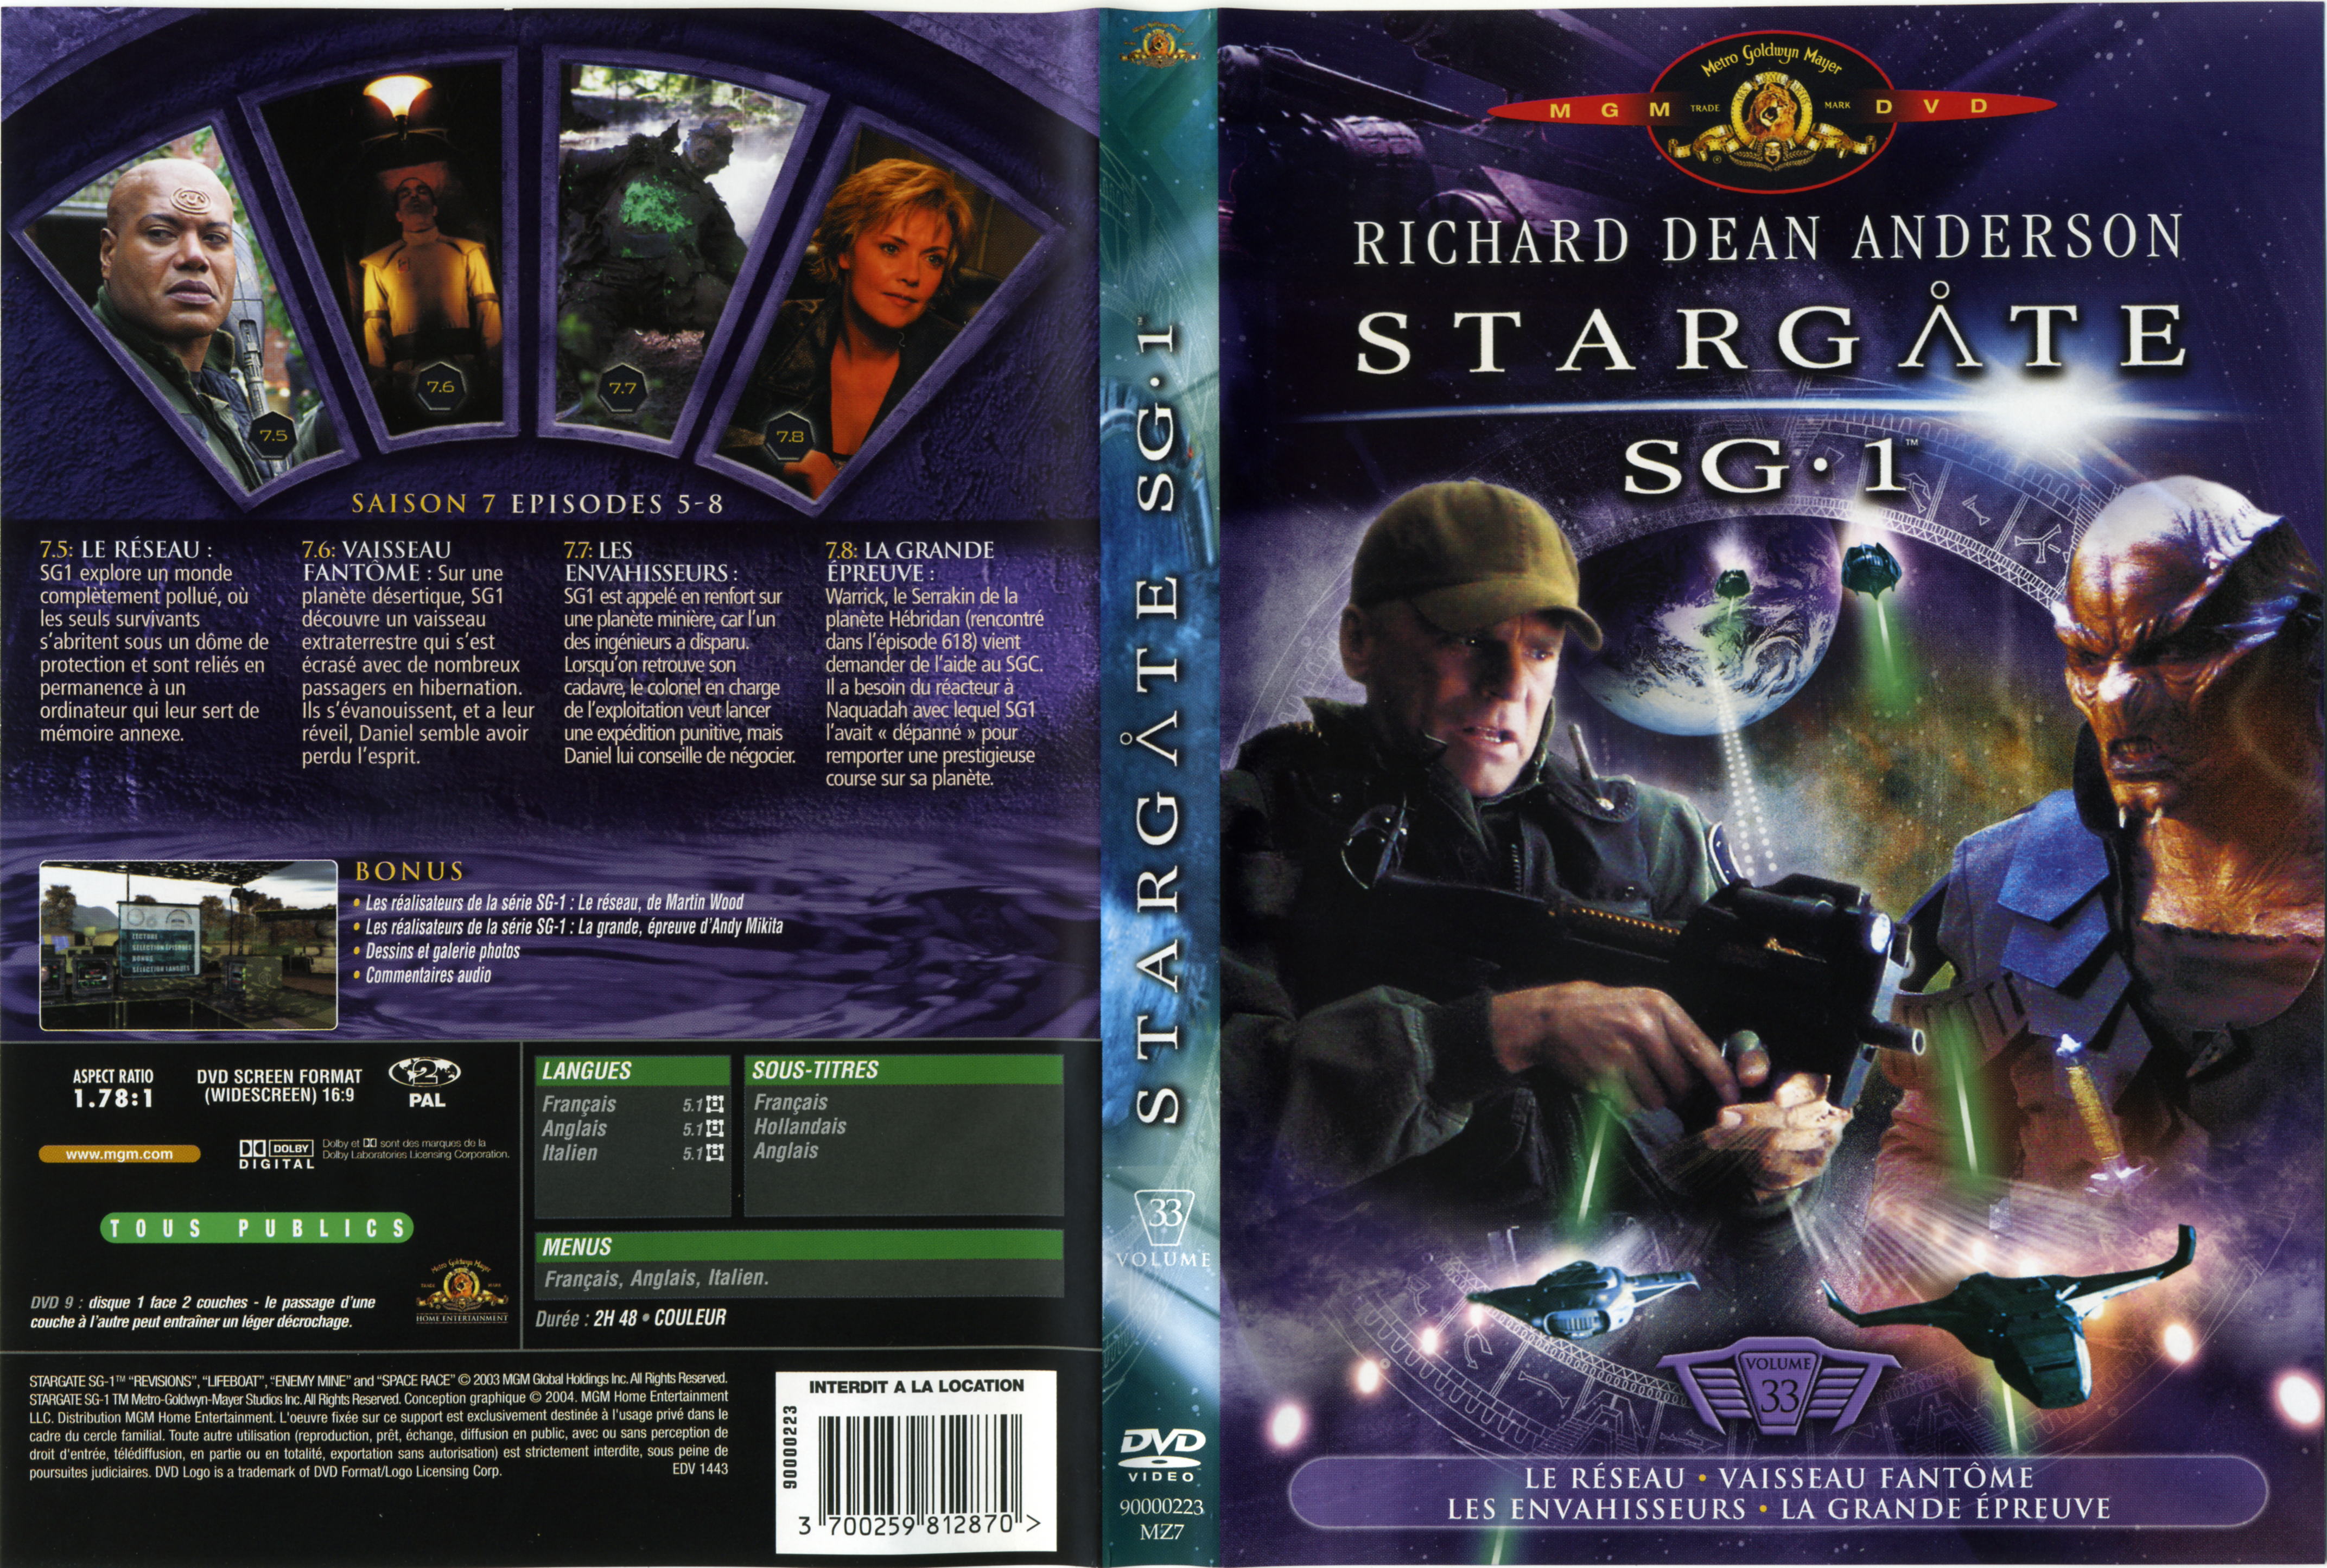 Jaquette DVD Stargate SG1 vol 33